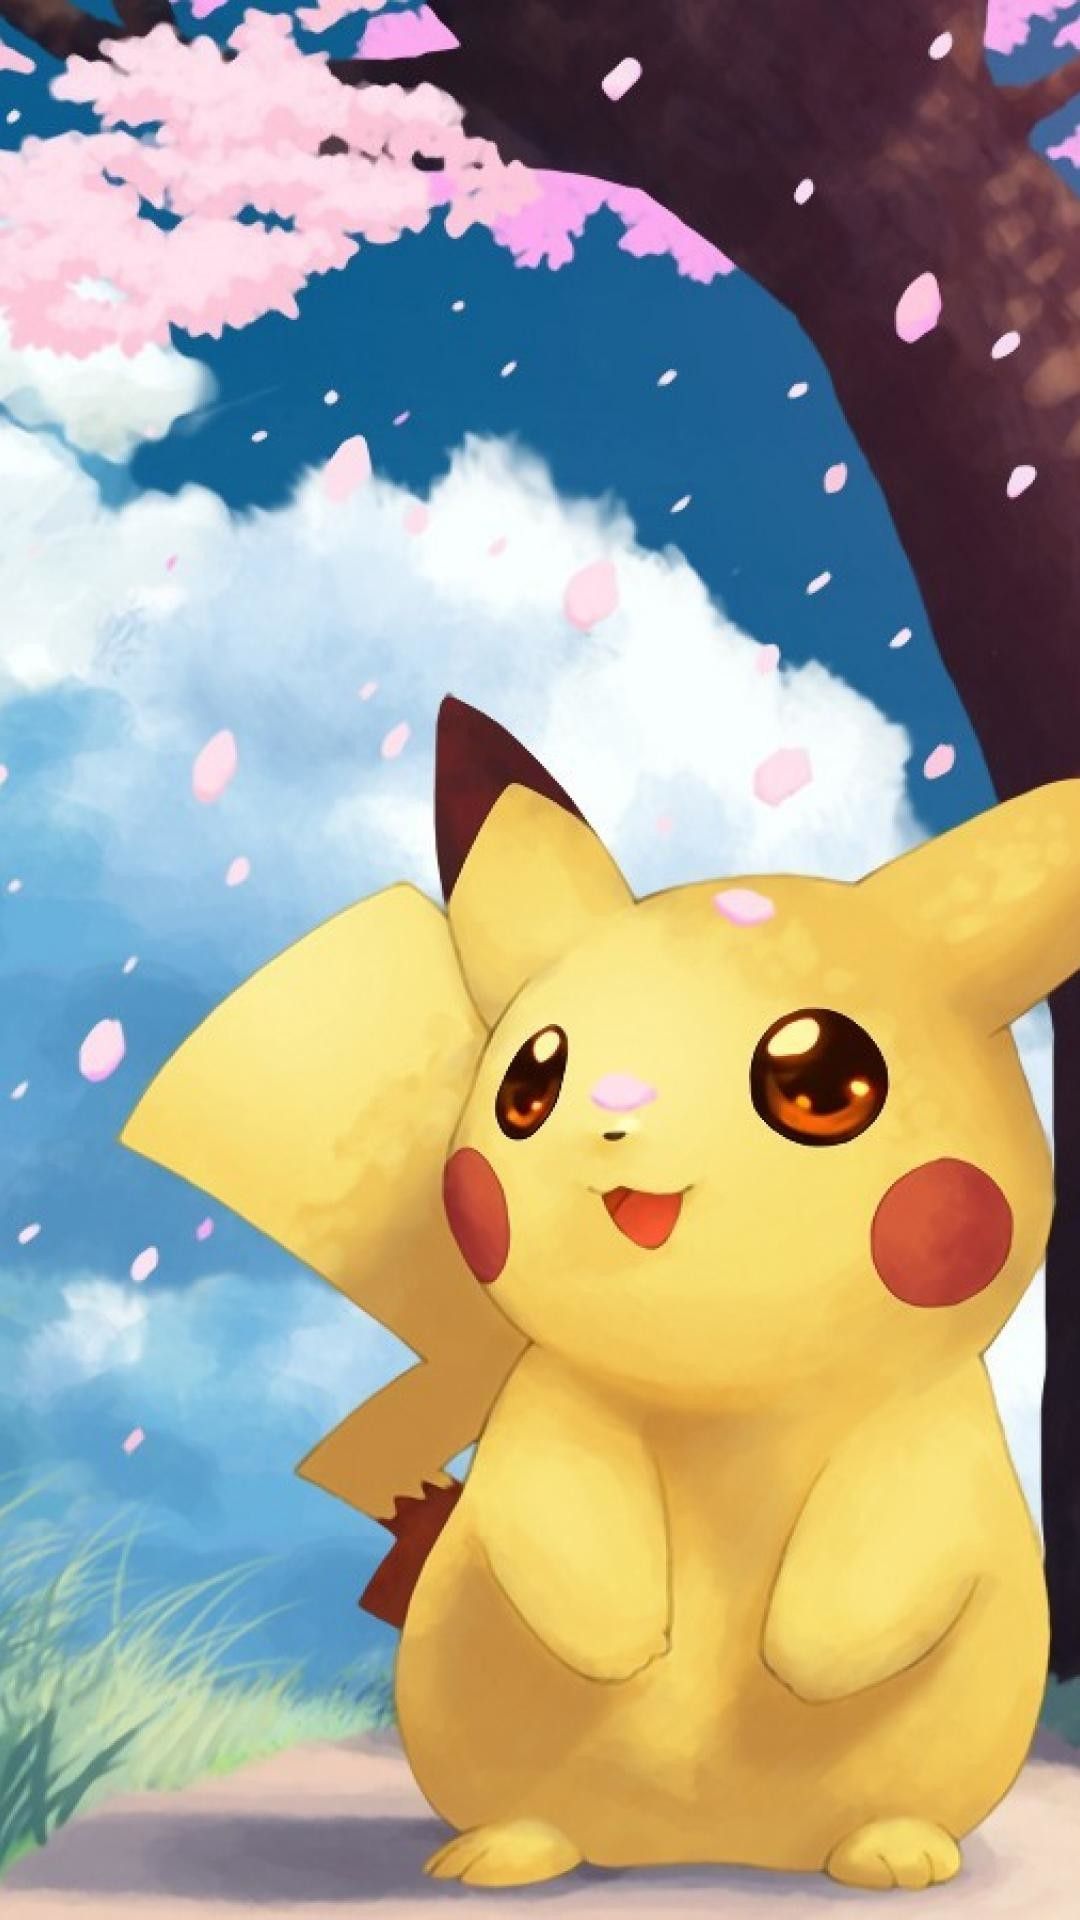 Top 999+ Cute Pokemon Wallpaper Full HD, 4K✓Free to Use